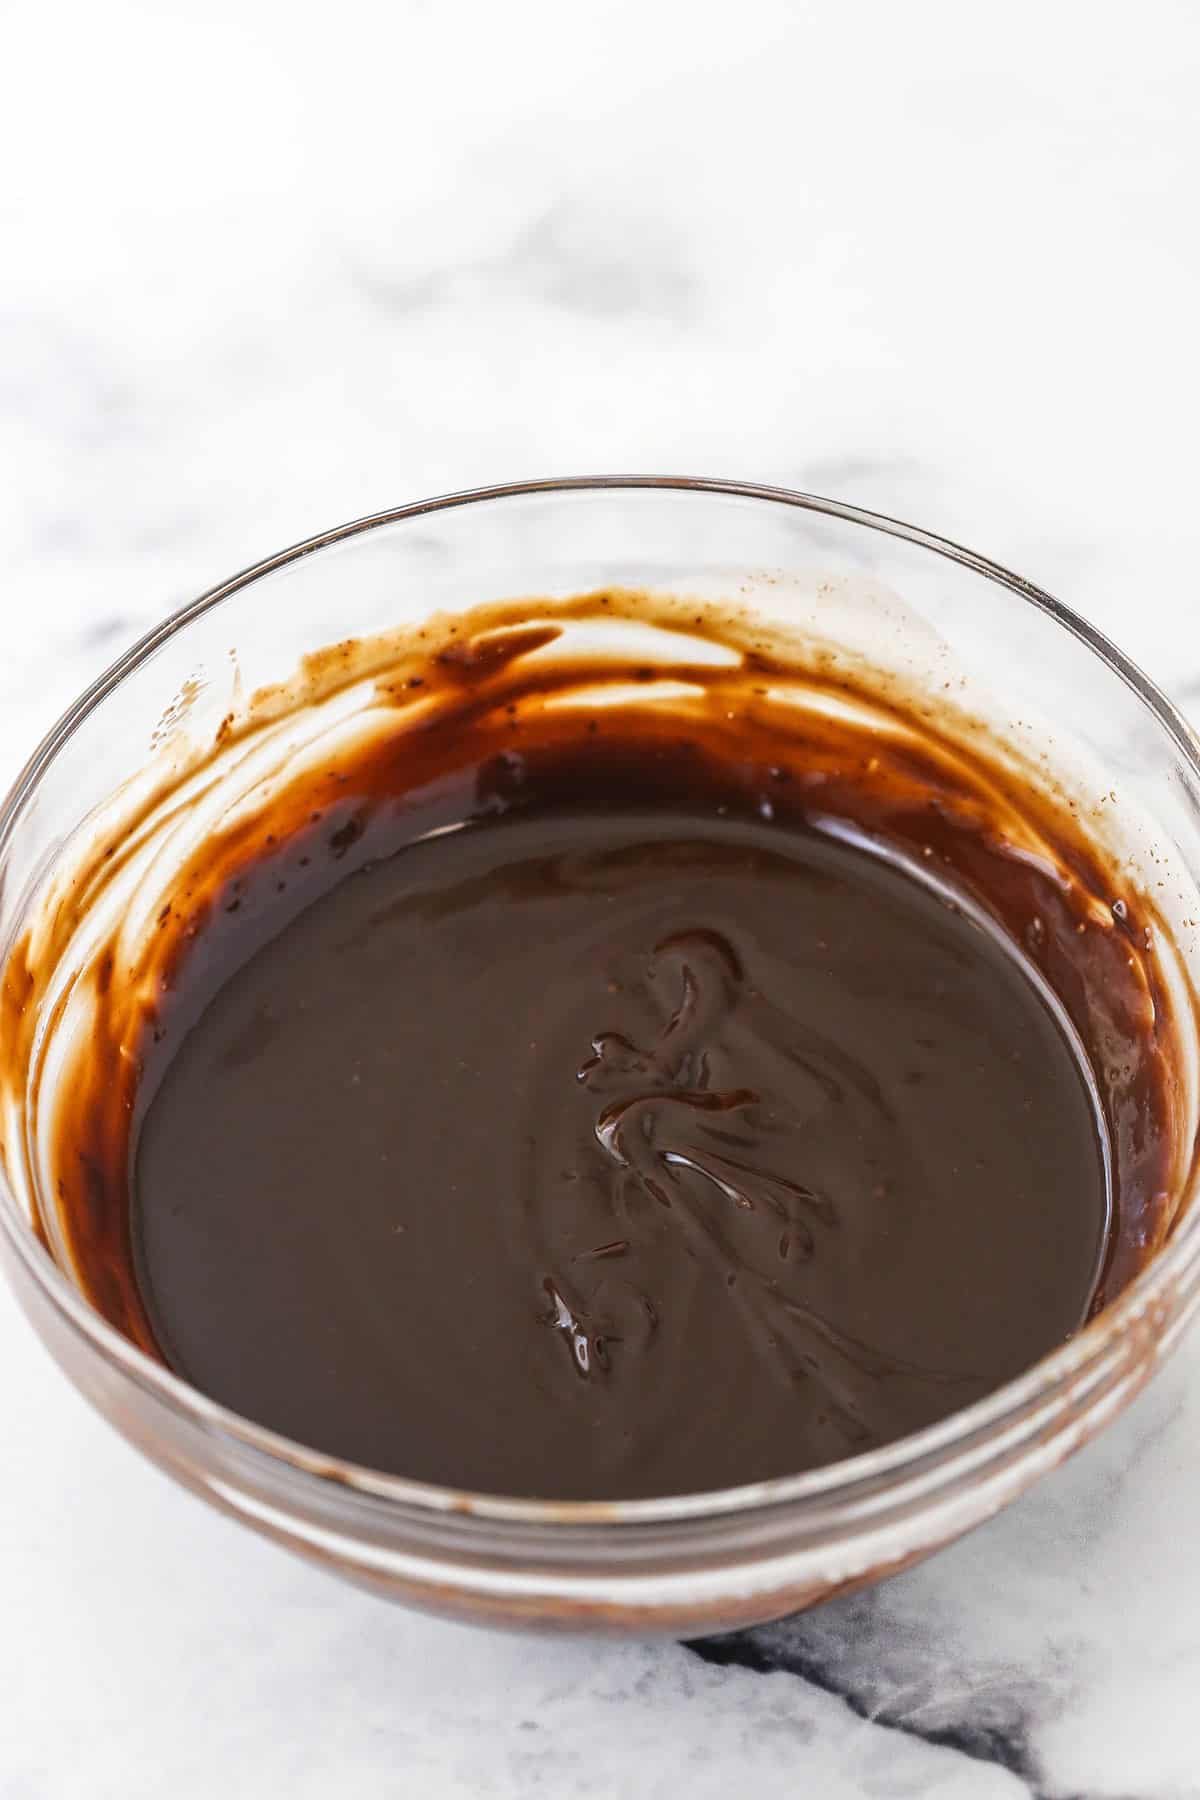 Chocolate ganache in a glass bowl